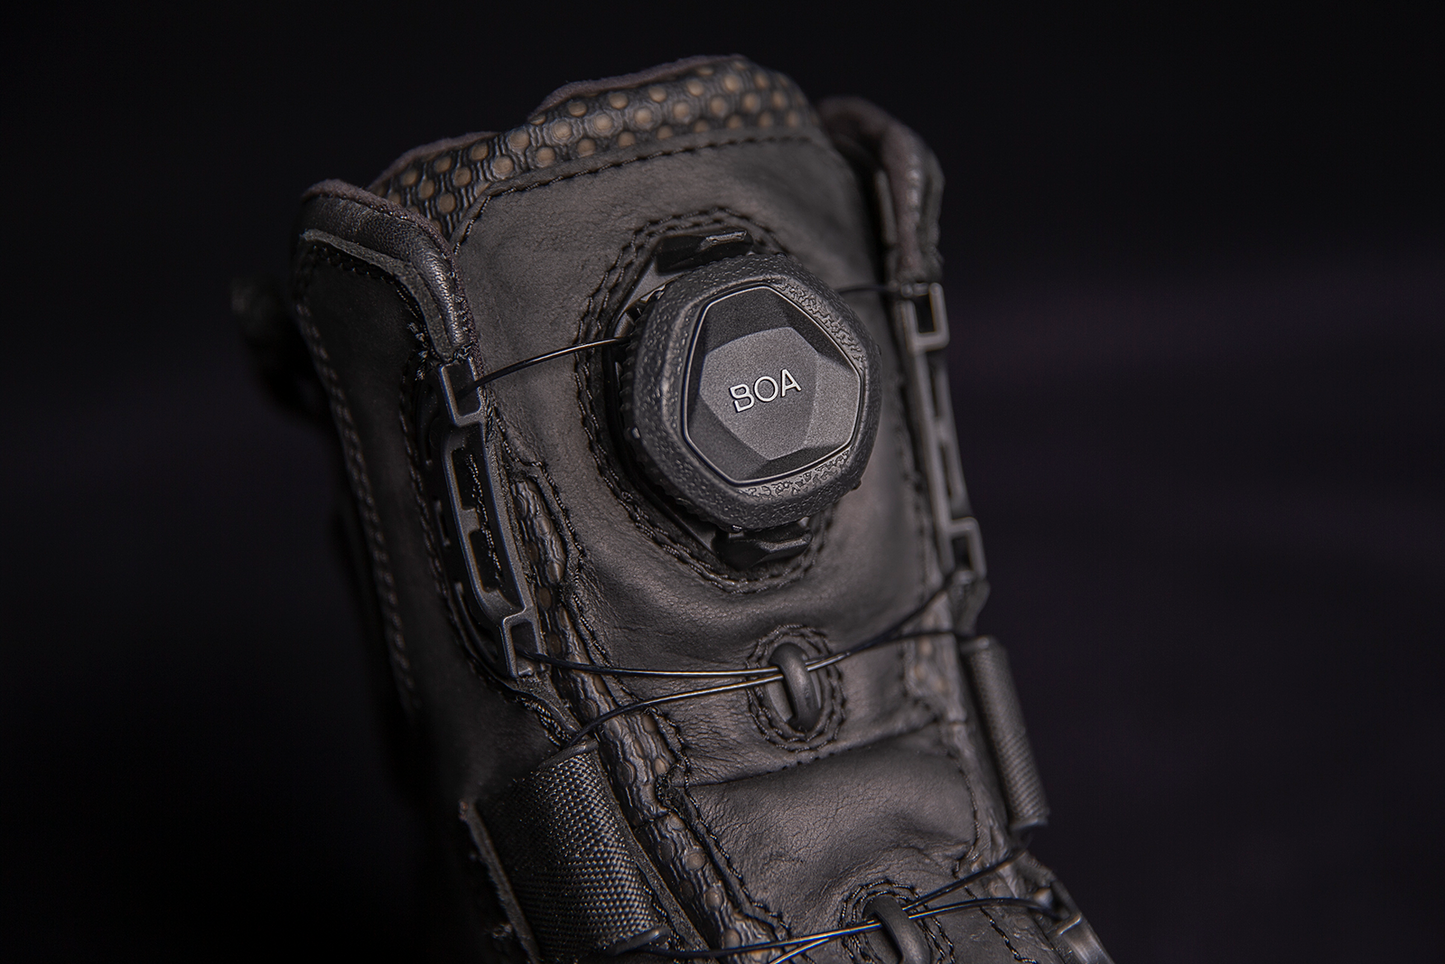 ICON Stormhawk Boots - Black - Size 8 3403-1150